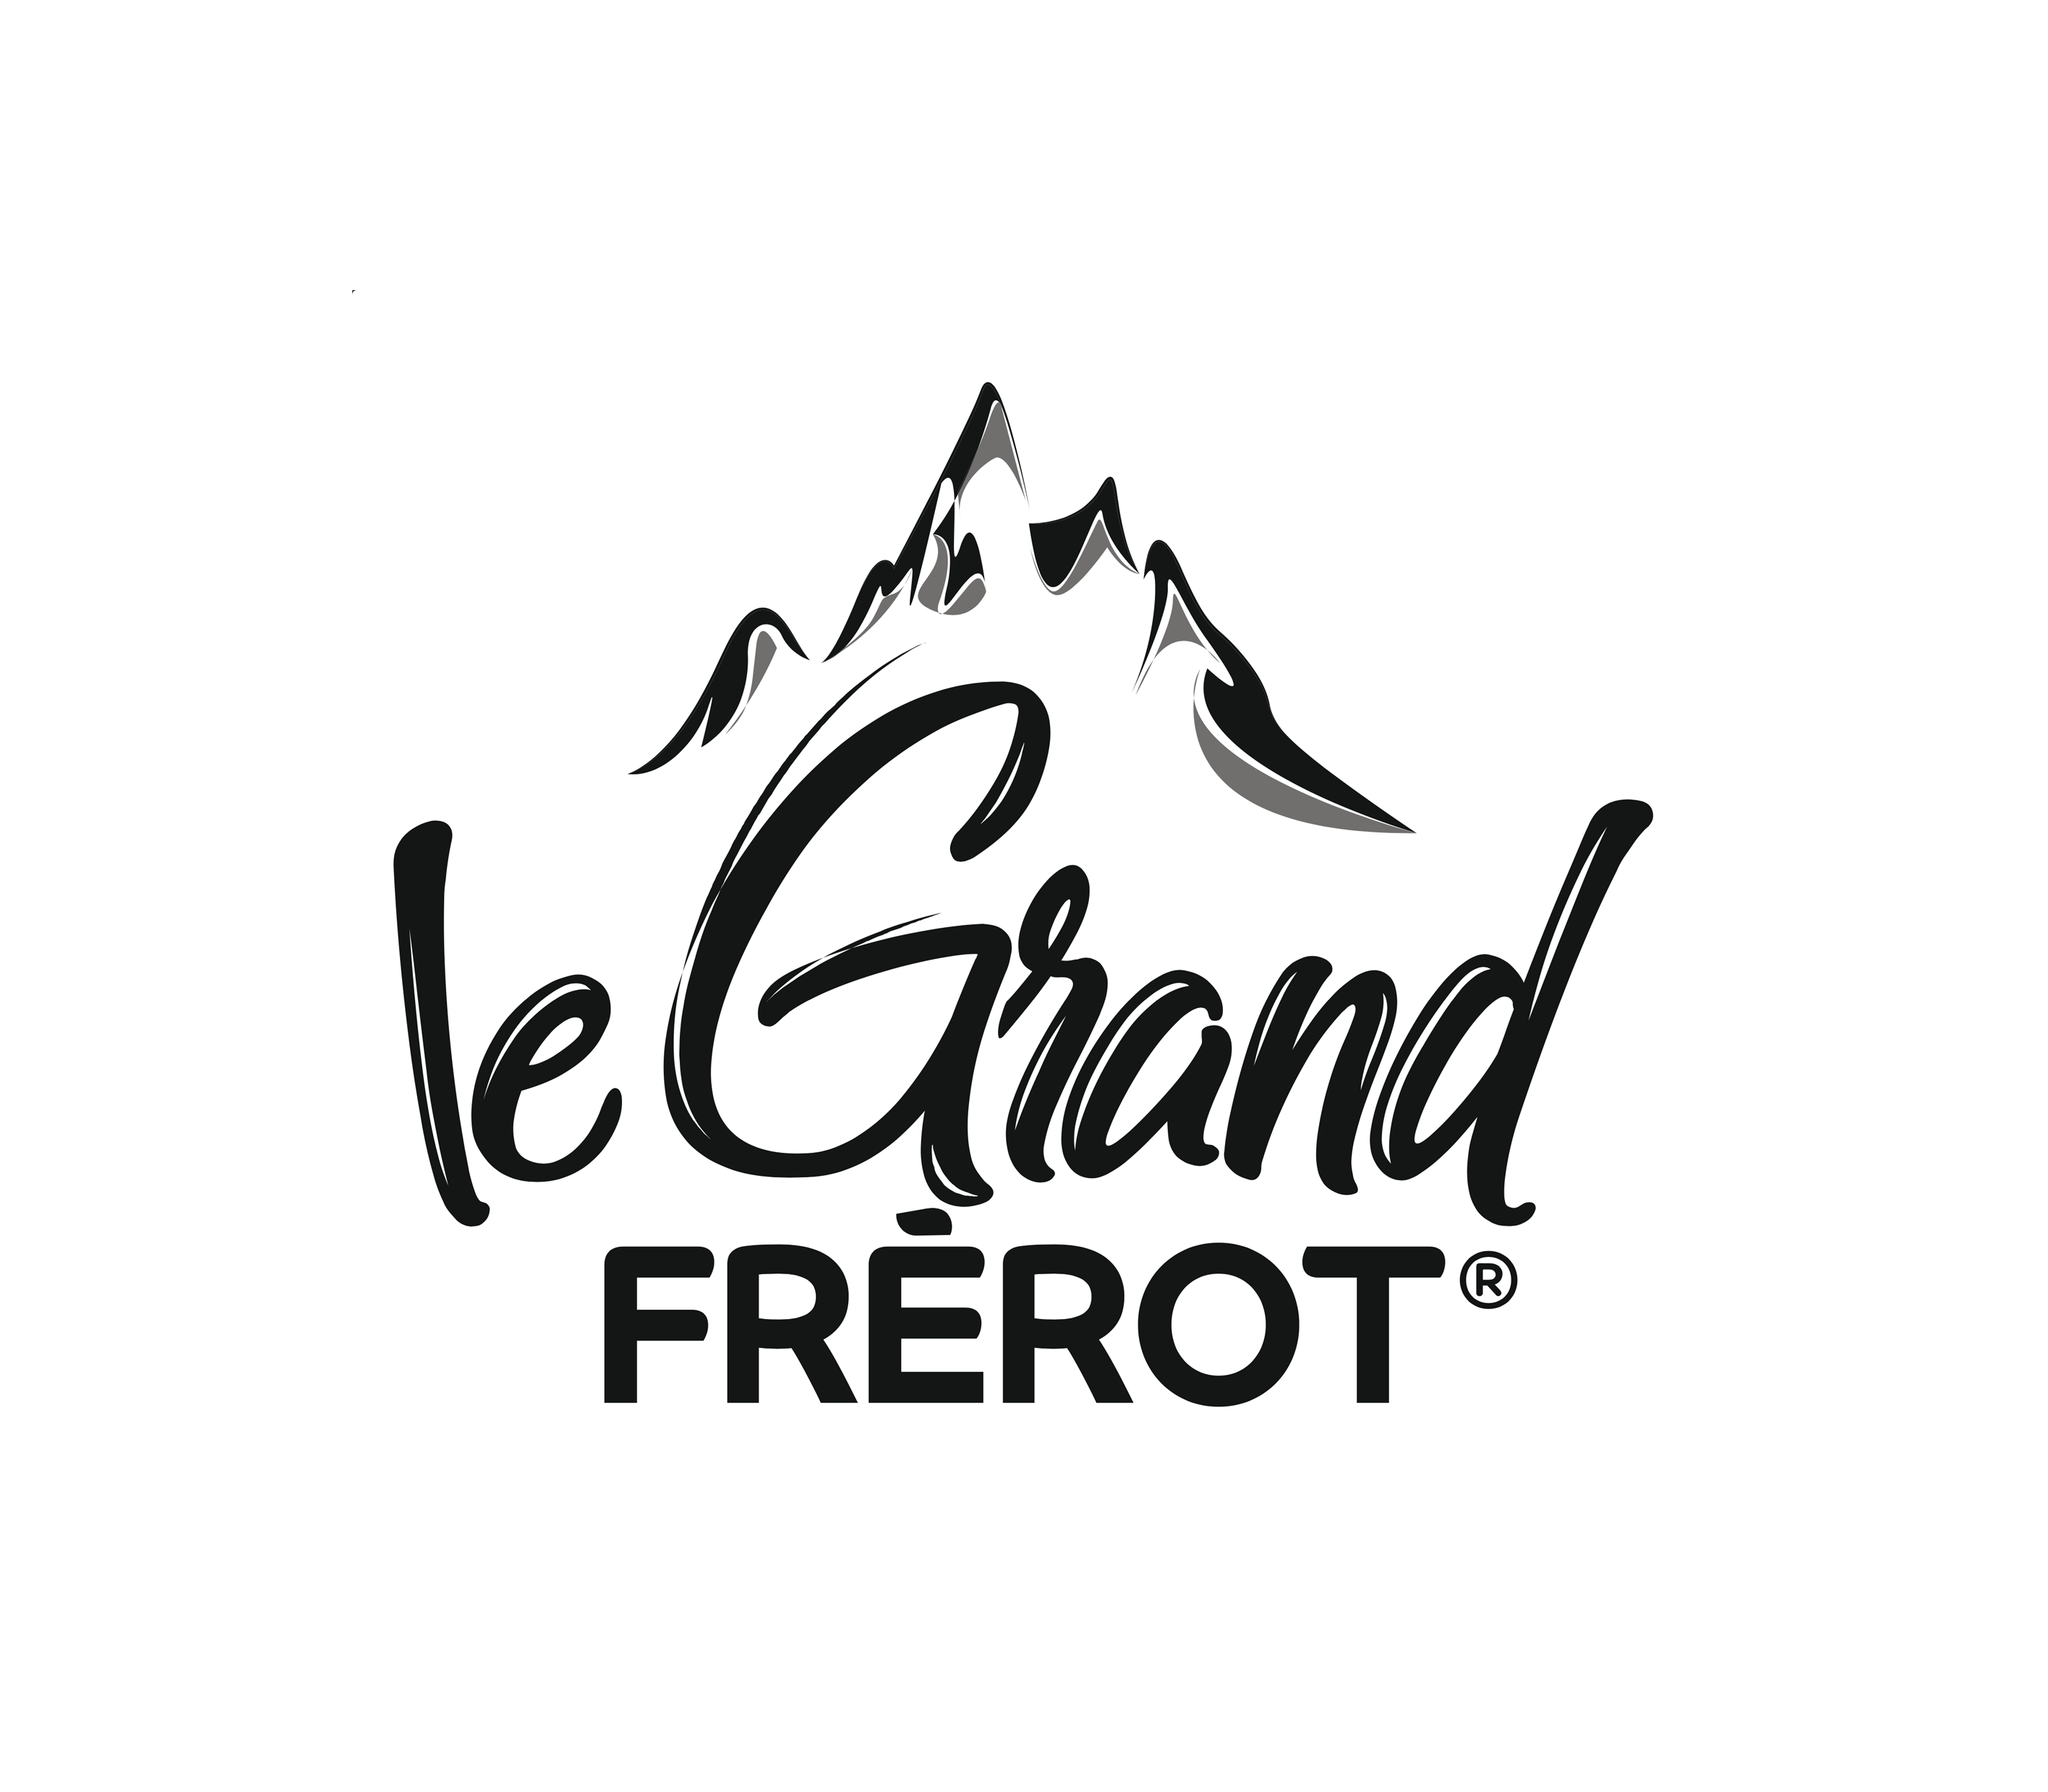 « Le Grand Frérot® »